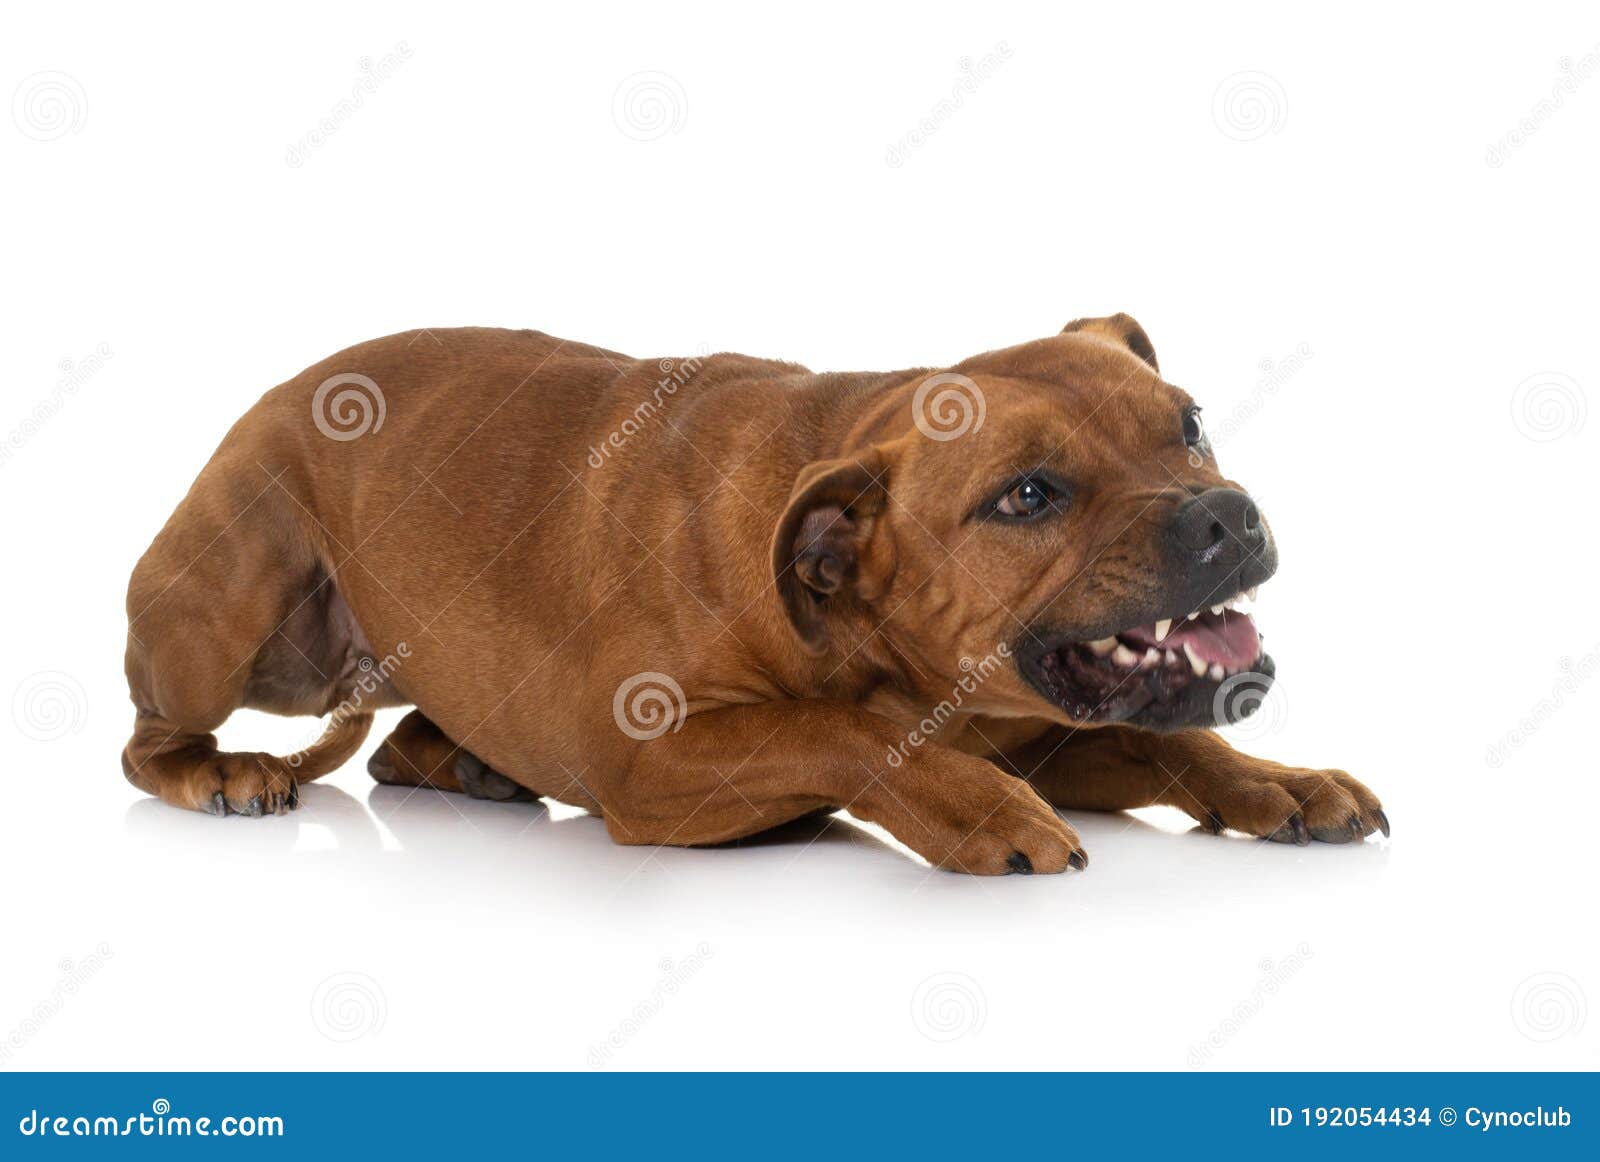 aggressive stafforshire bull terrier